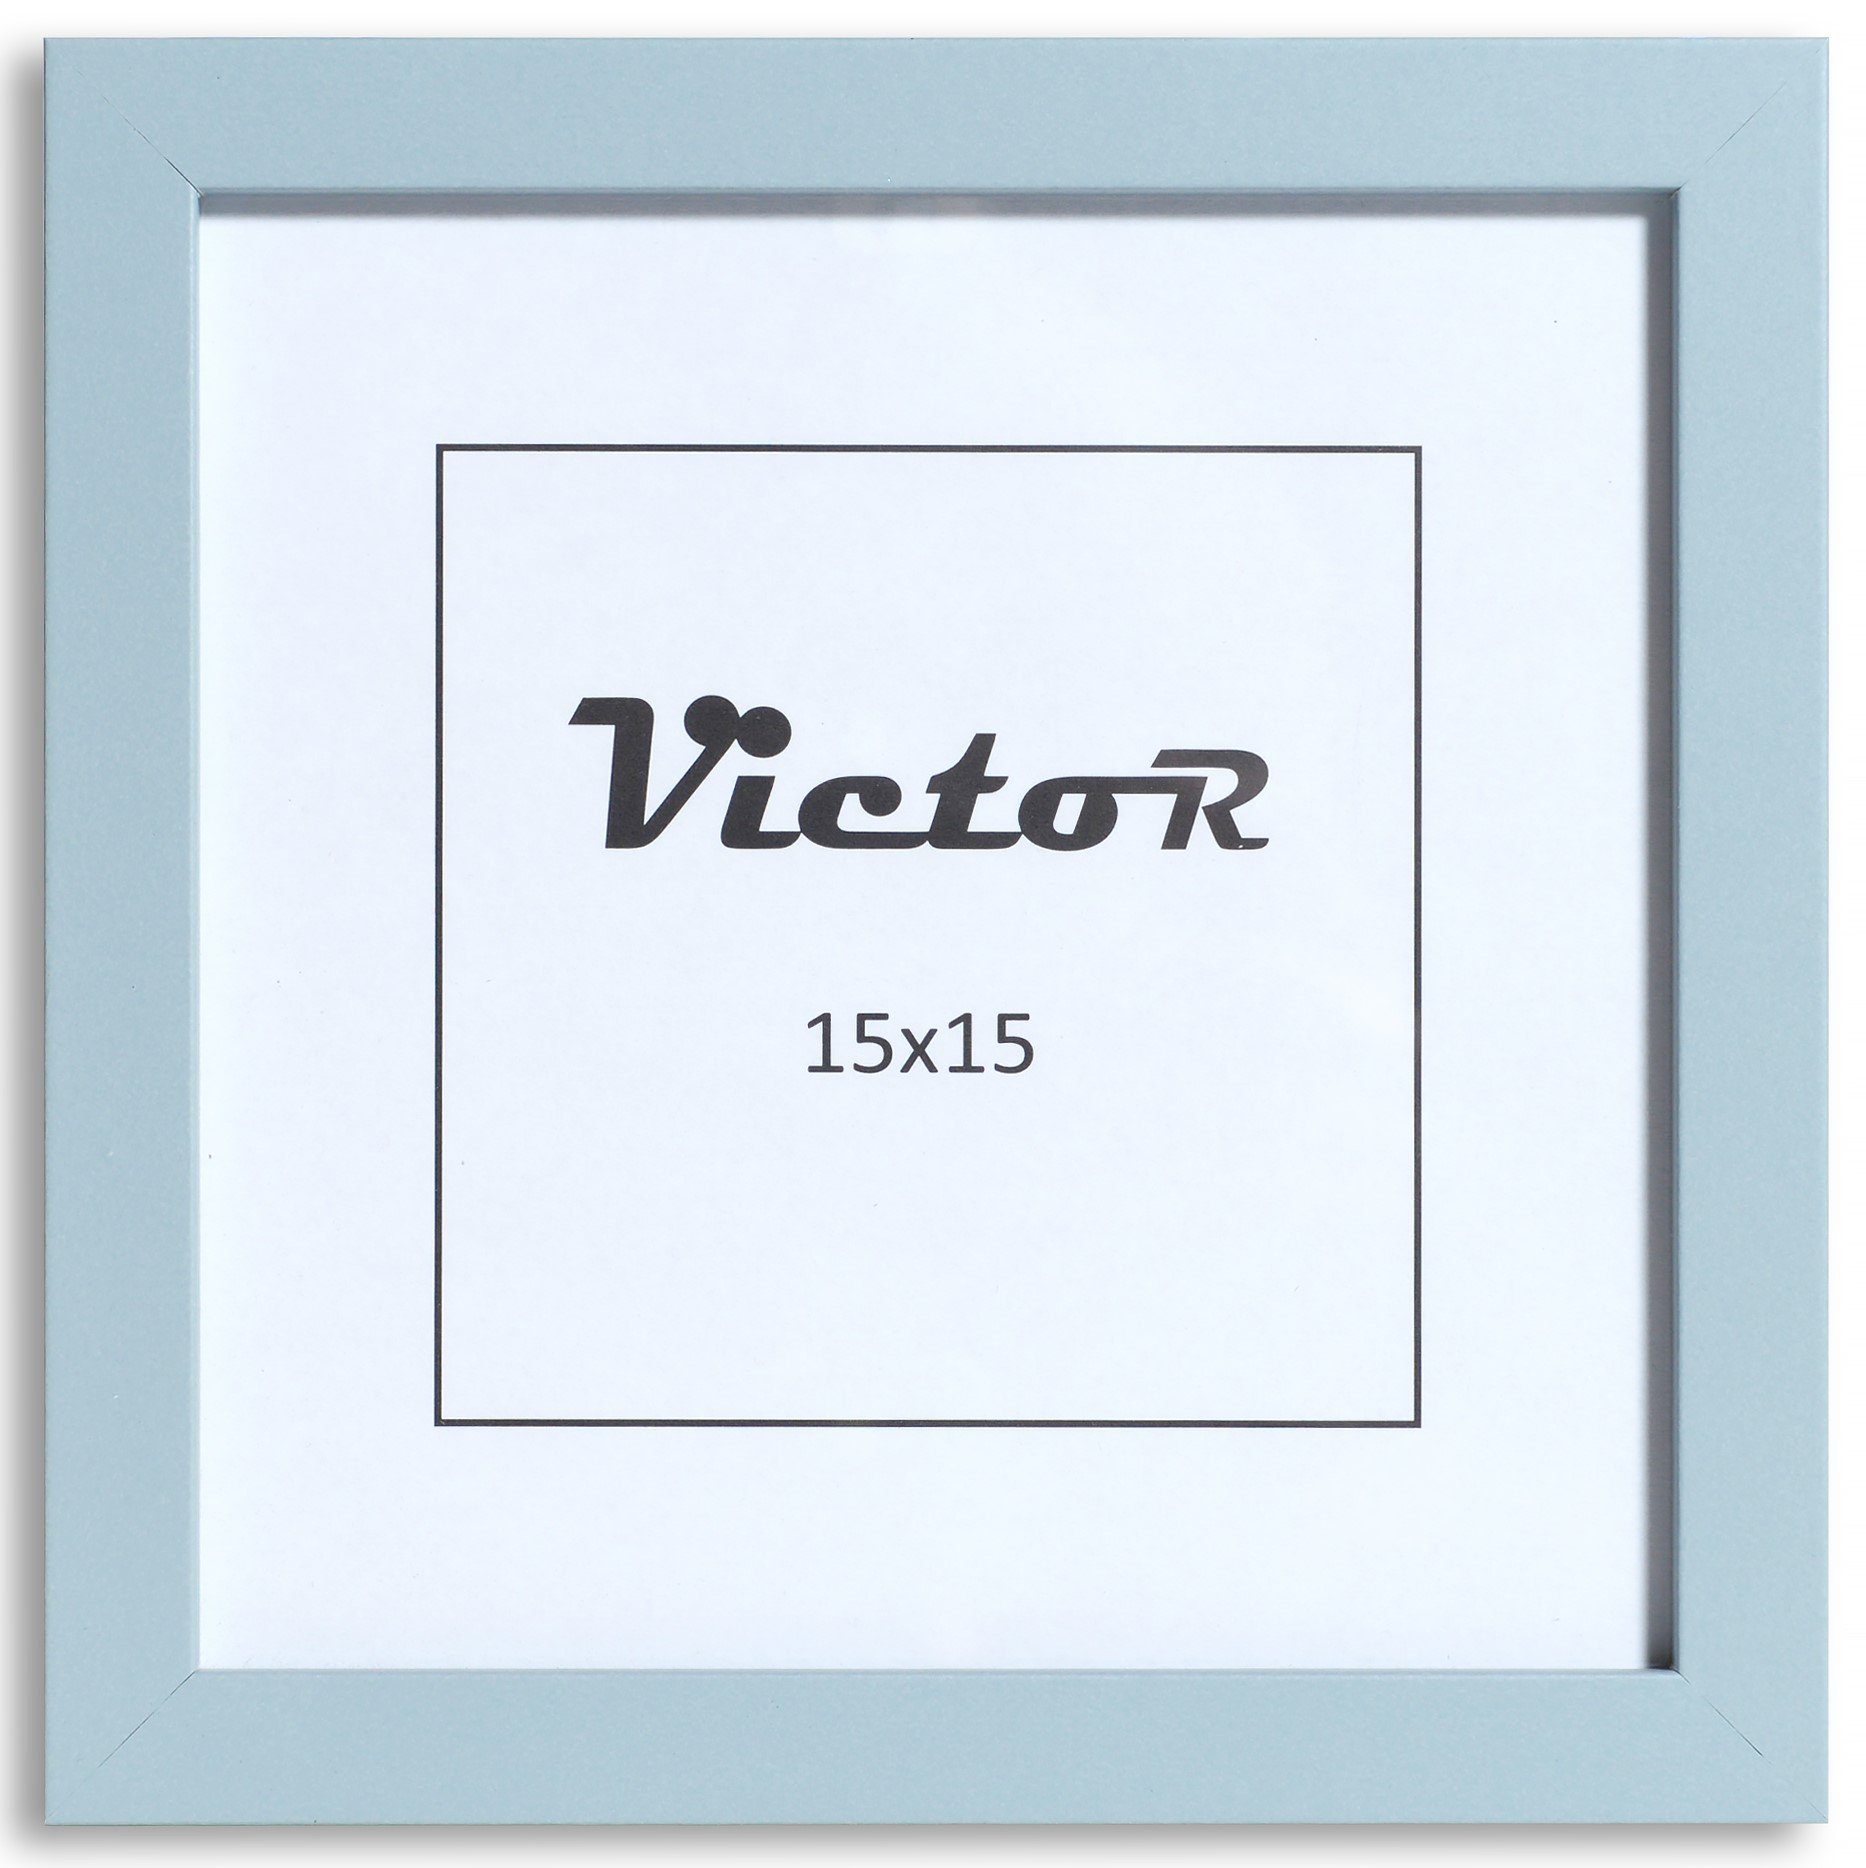 Victor (Zenith) Bilderrahmen Bilderrahmen "Klee" - Farbe: Blau - Größe: 15 x 15 cm, Bilderrahmen Blau 15x15 cm, Bilderrahmen Modern